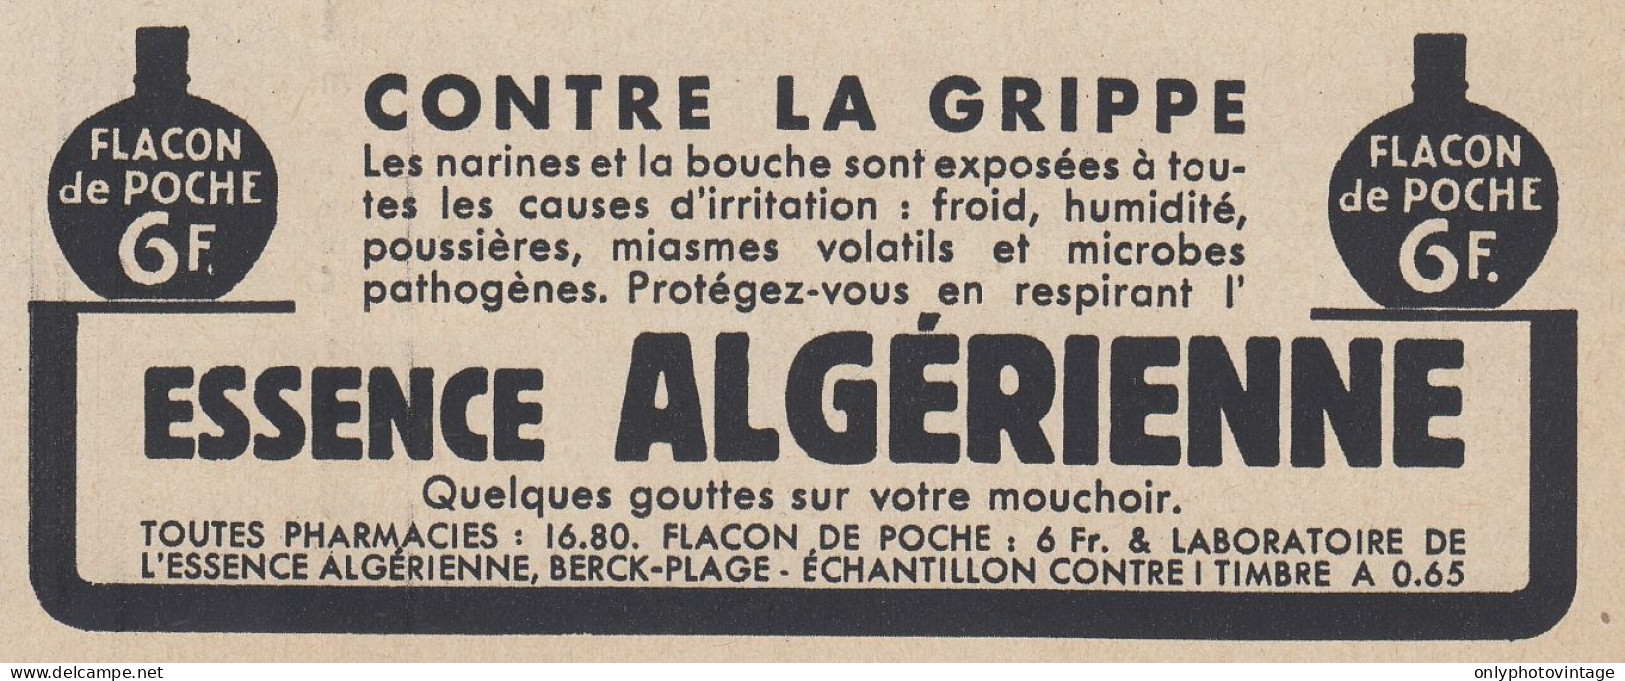 Essence ALGERIENNE - 1938 Vintage Advertising - Pubblicit� Epoca - Werbung